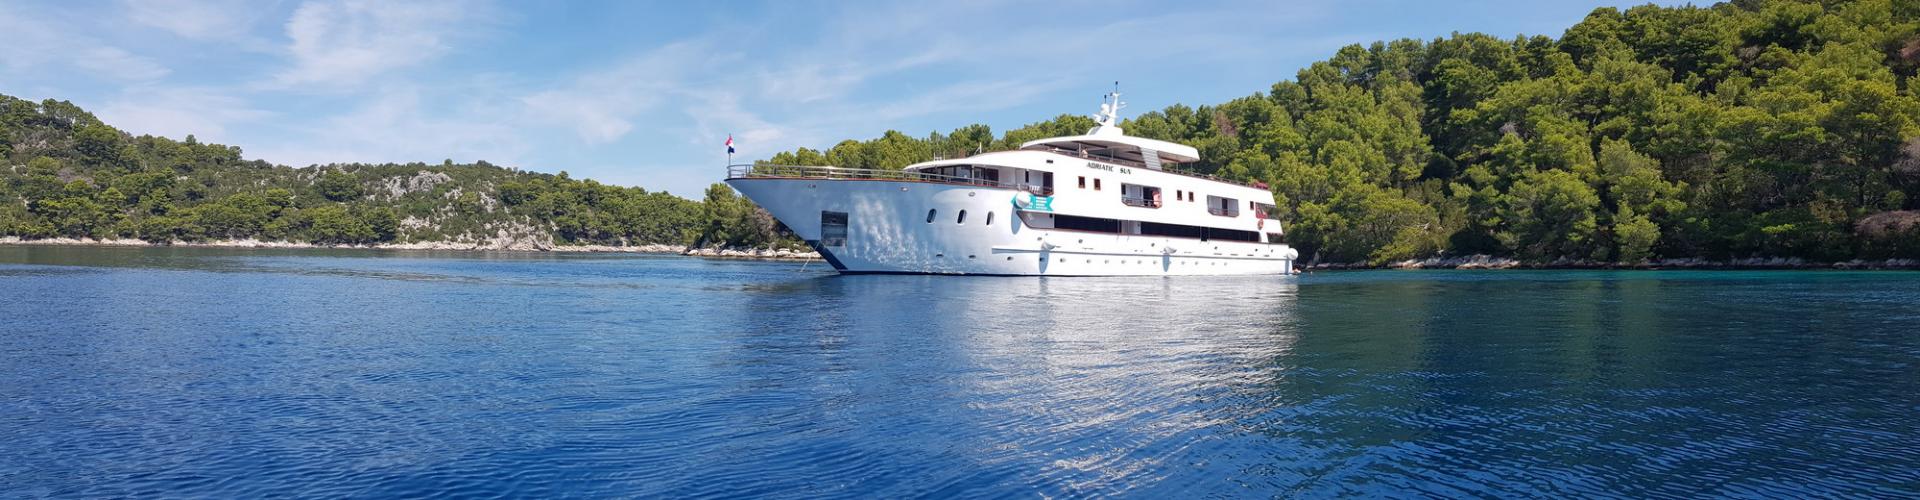 Motoryacht Deluxe Superior Kreuzfahrtschiff MV Adriatic Sun